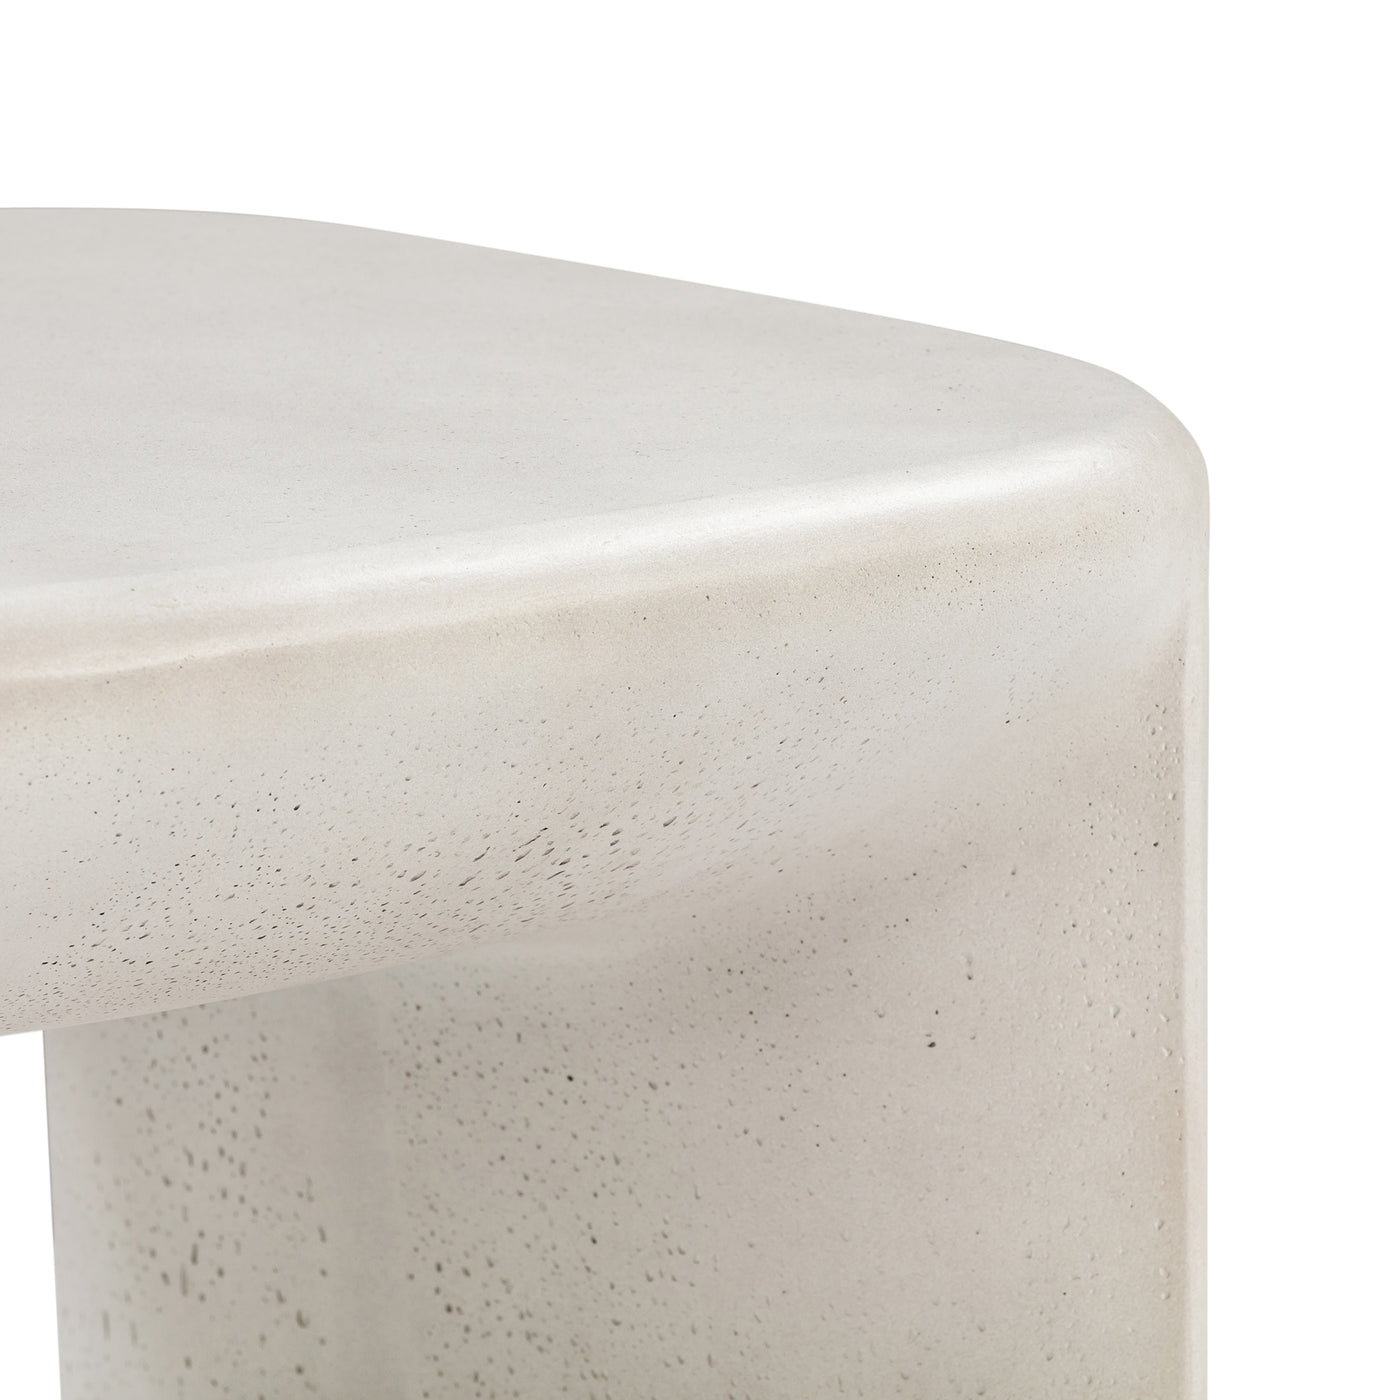 Kubo Concrete Side Table